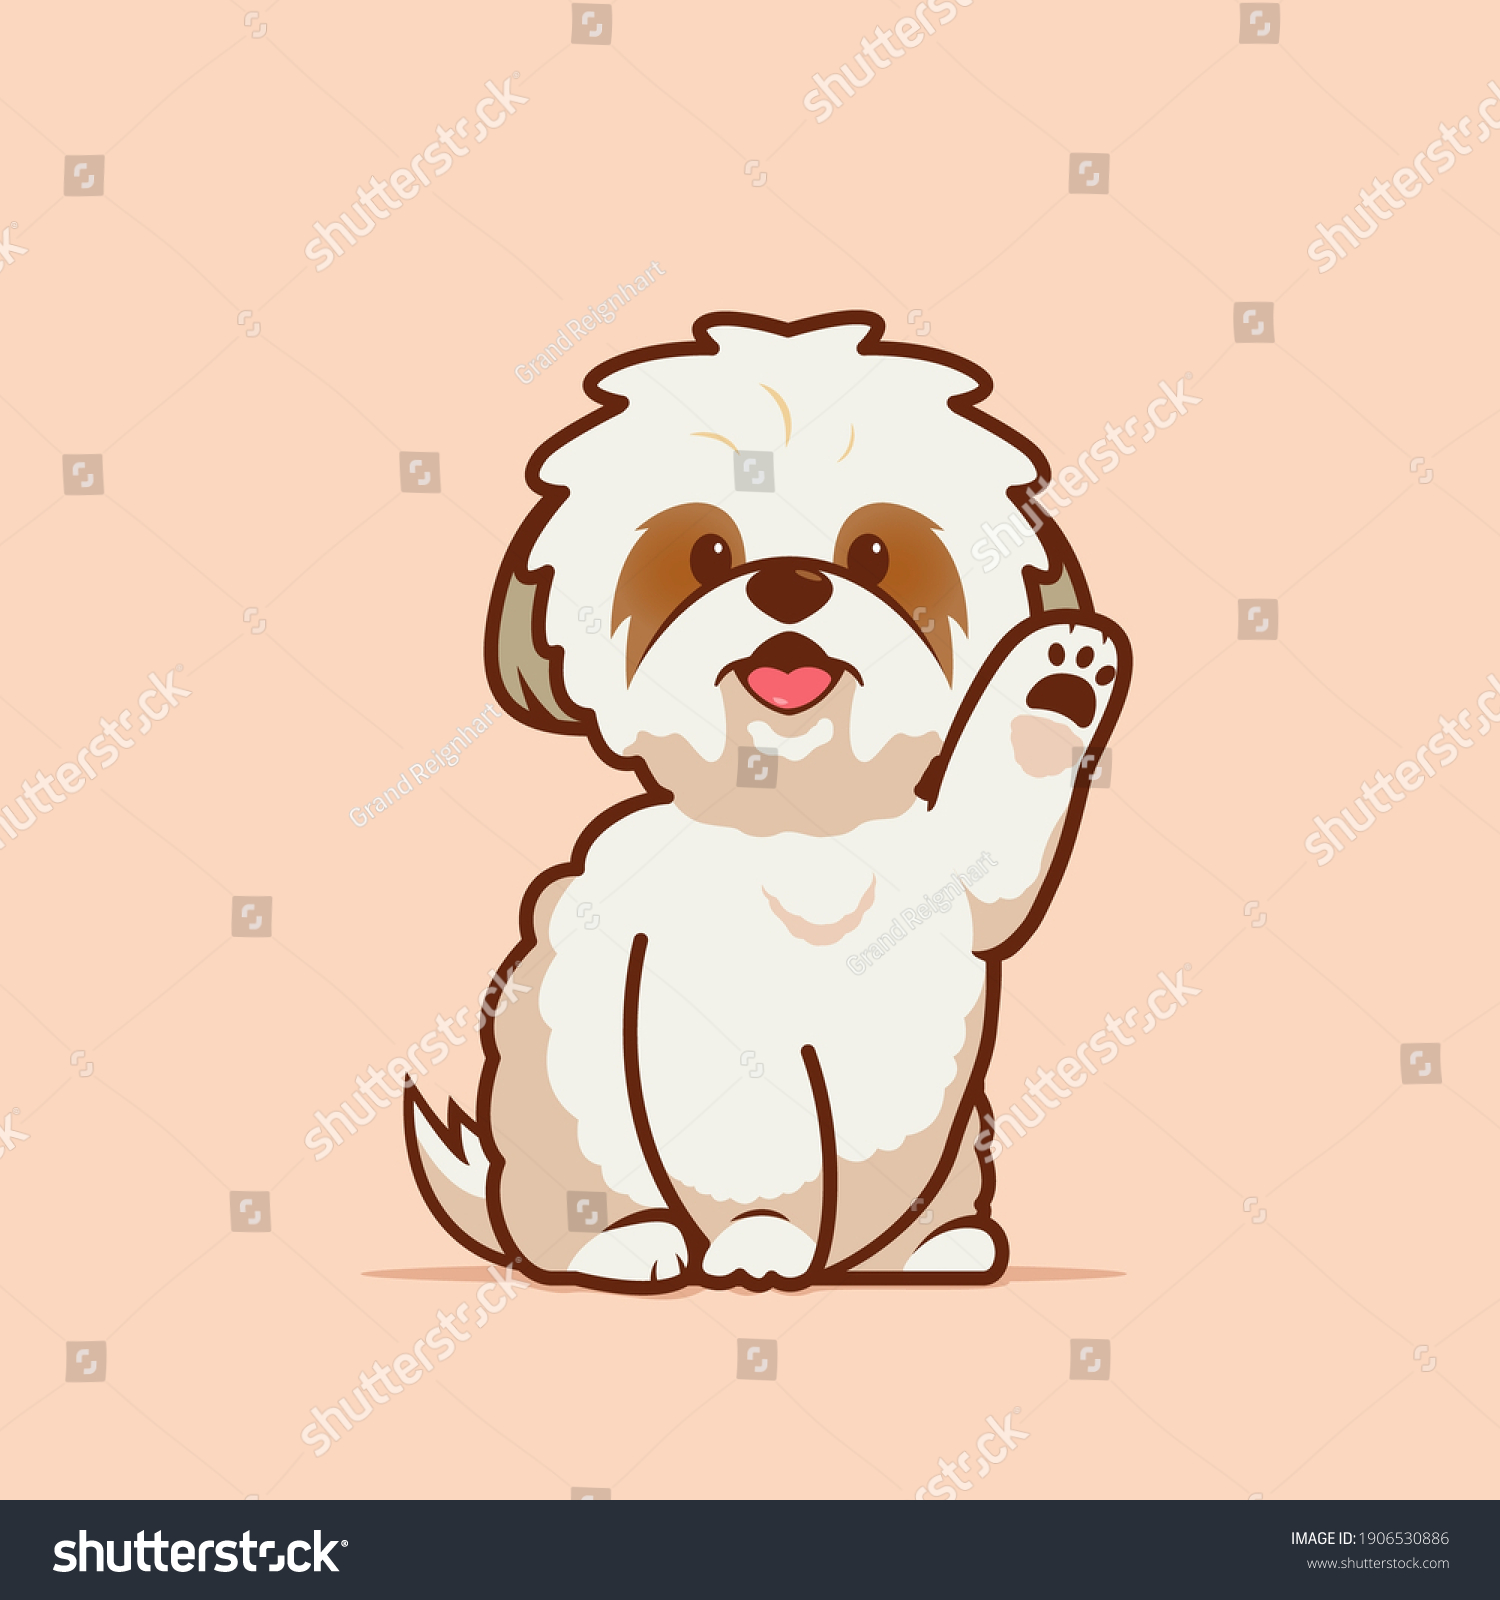 SVG of Cartoon illustration of shih tzu dog cute pose. Vector illustration of shih tzu dog svg